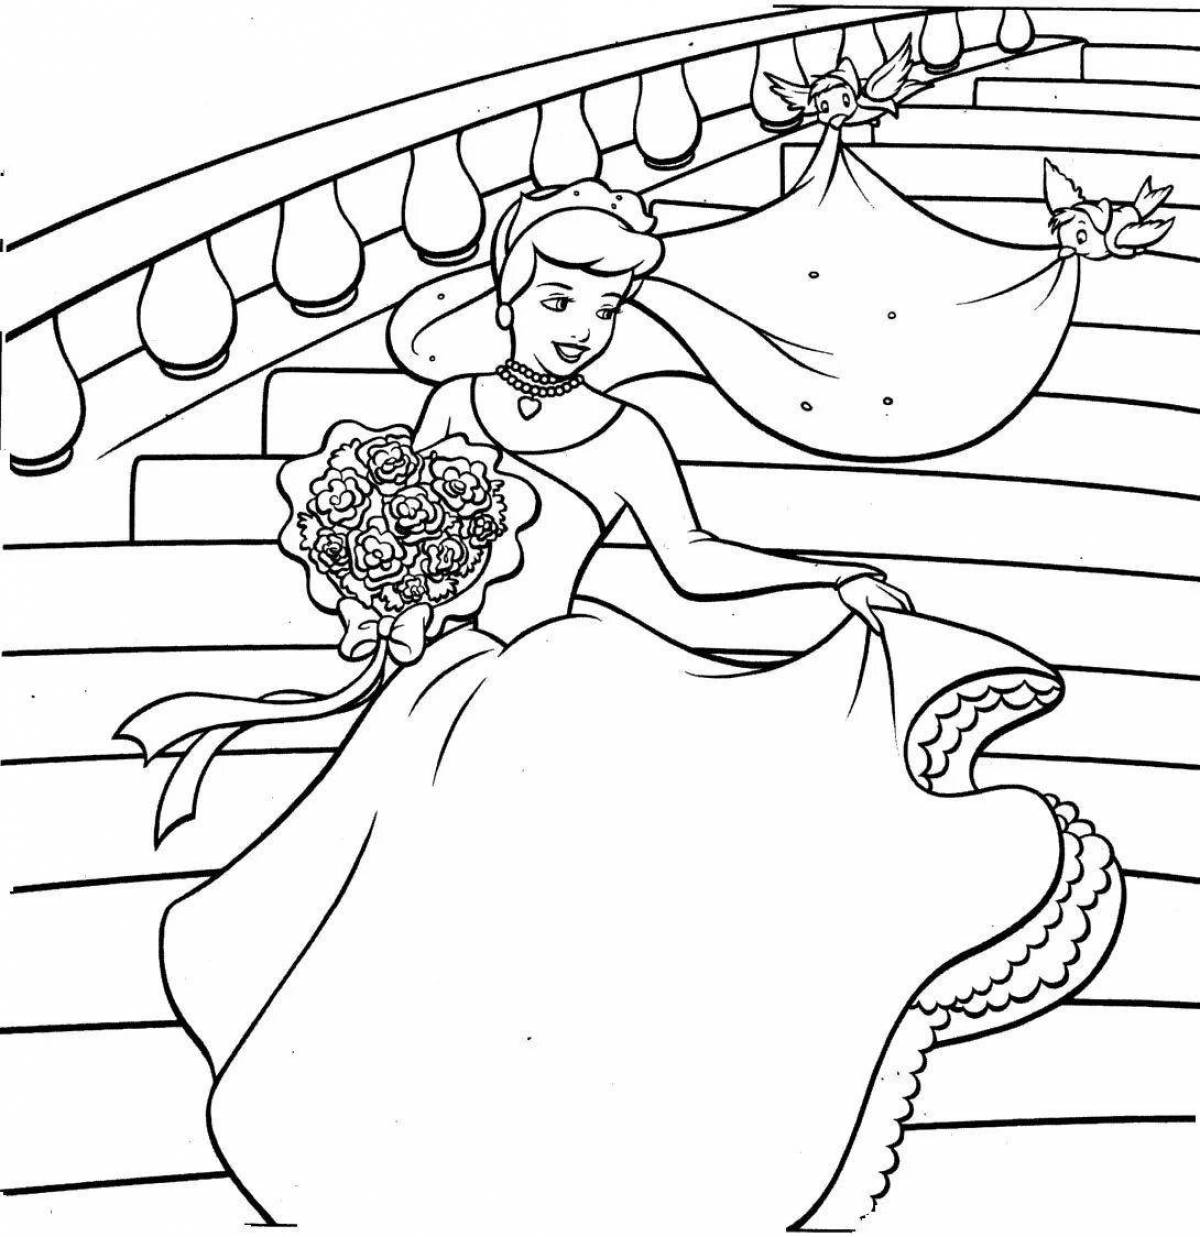 Coloring page dazzling princess at the ball